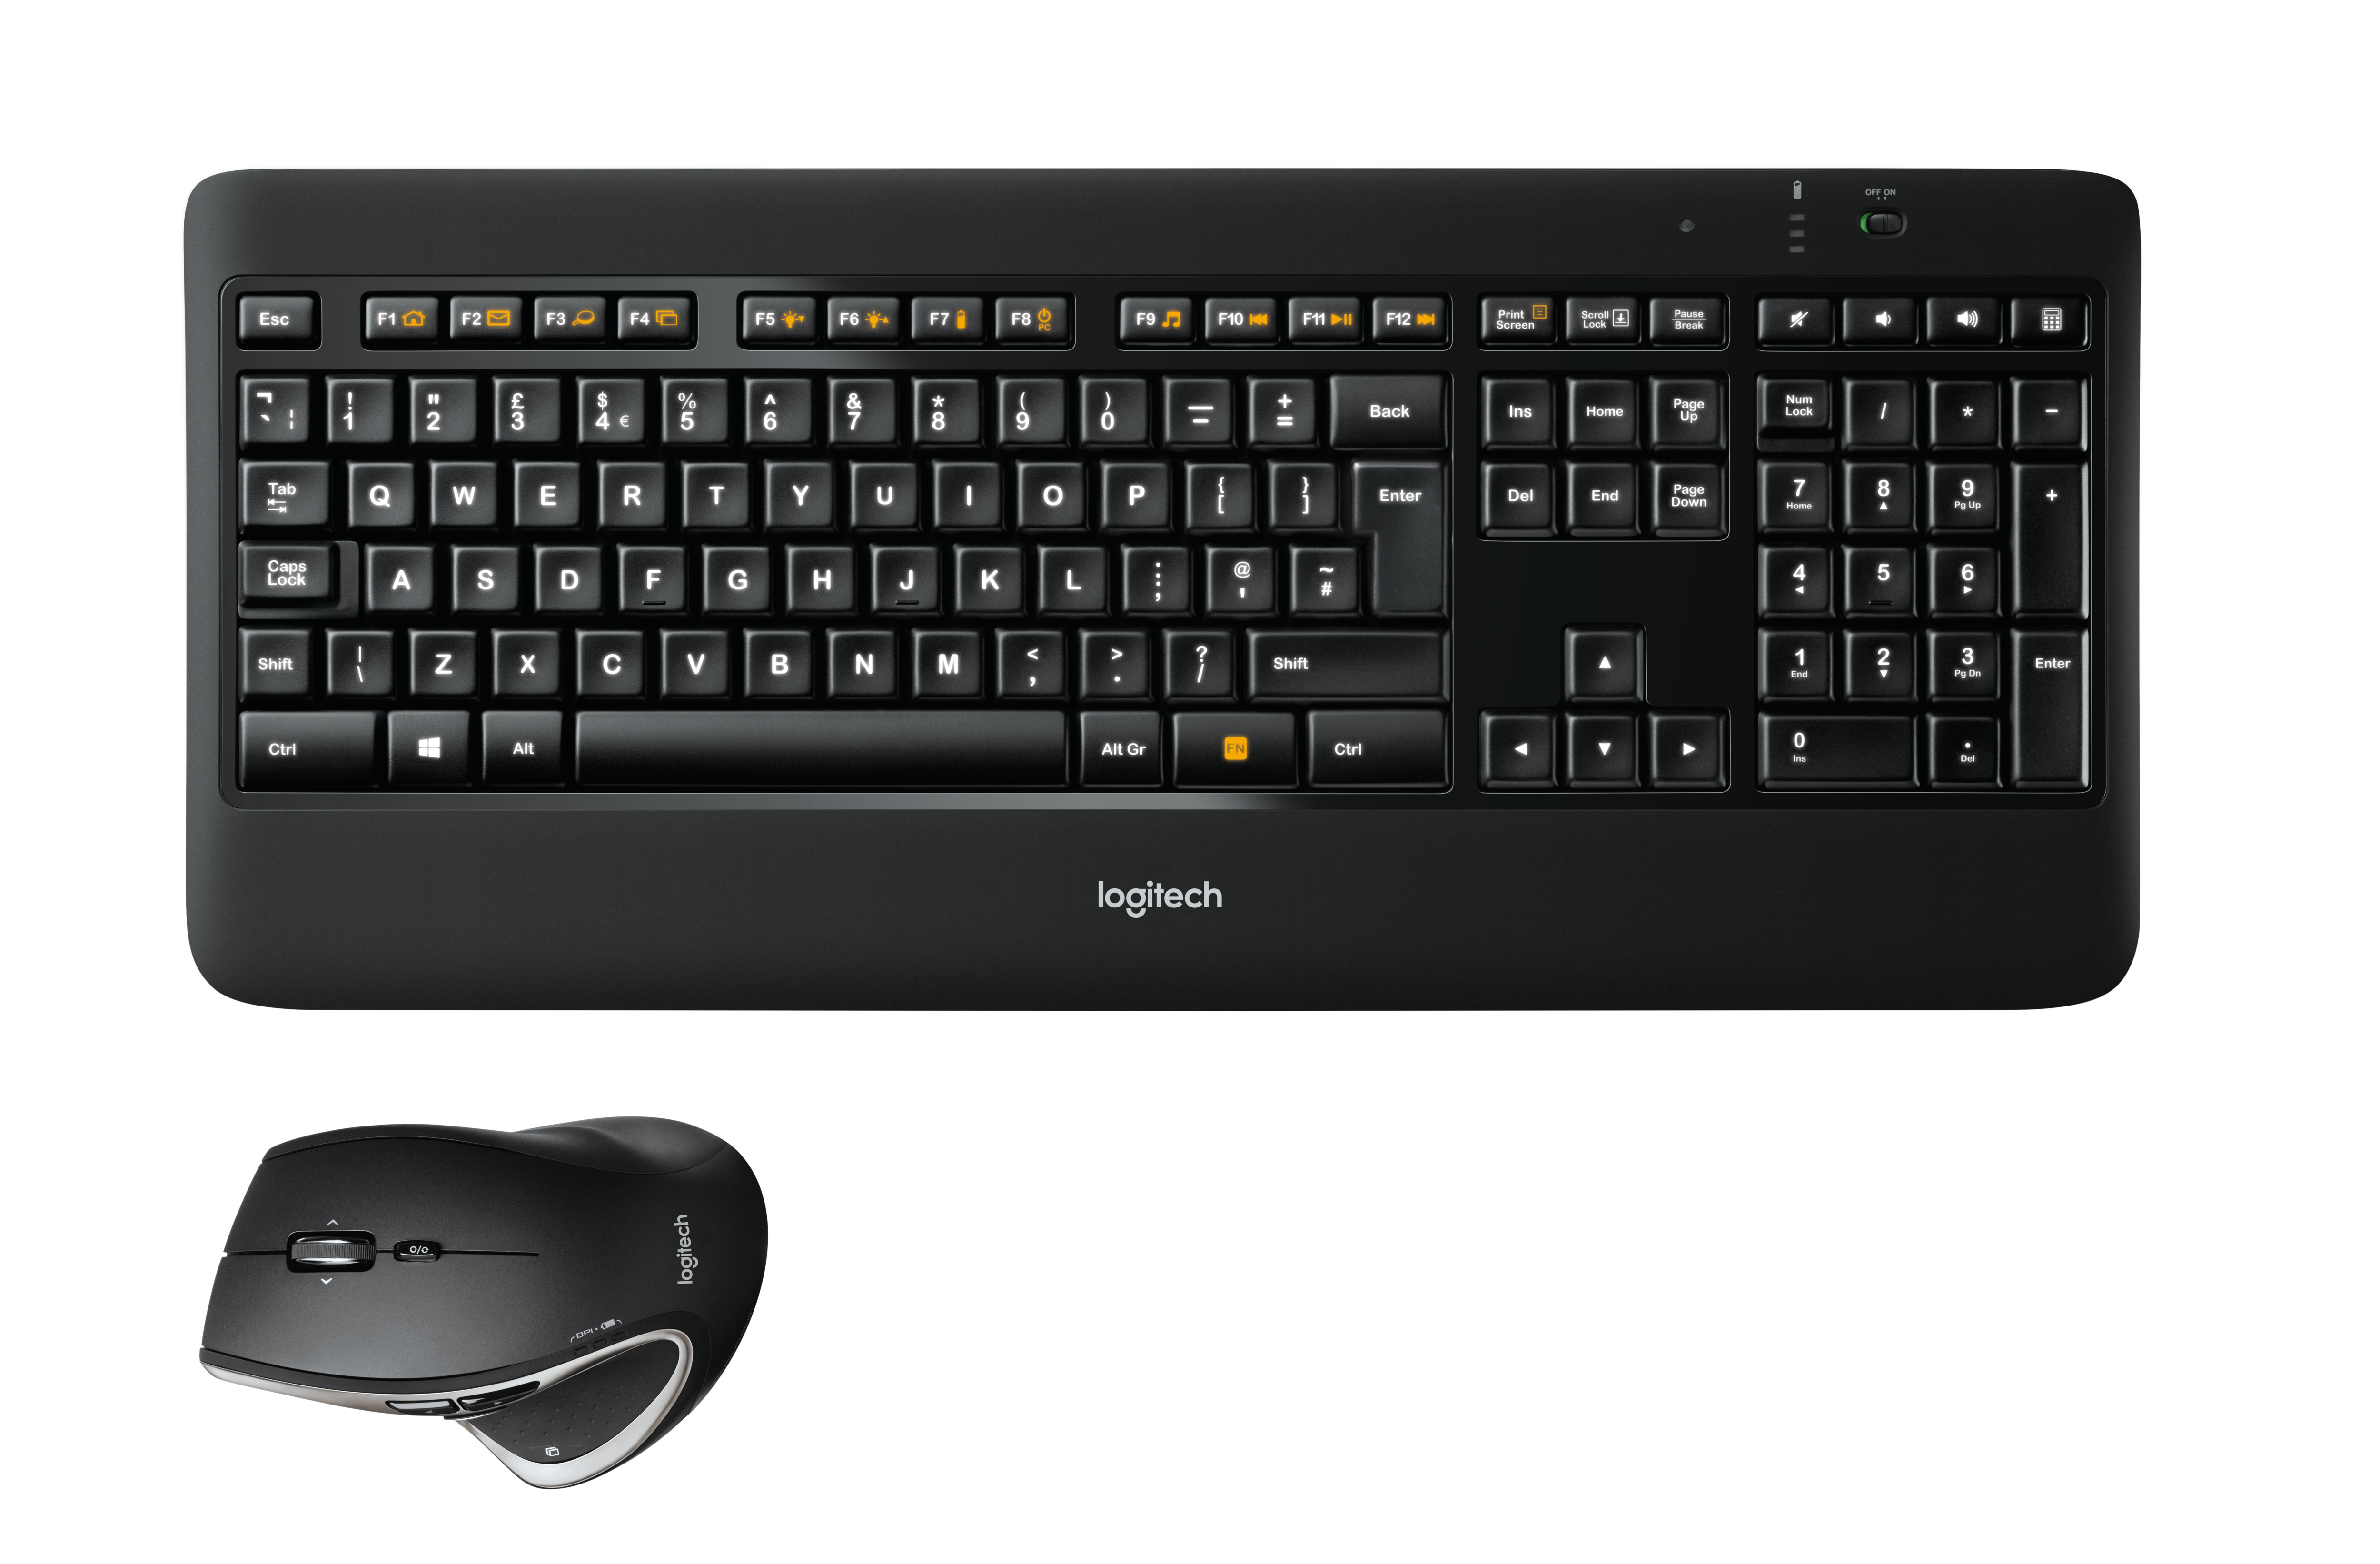 Logitech MX800 RF Wireless Keyboard Qwerty - Black